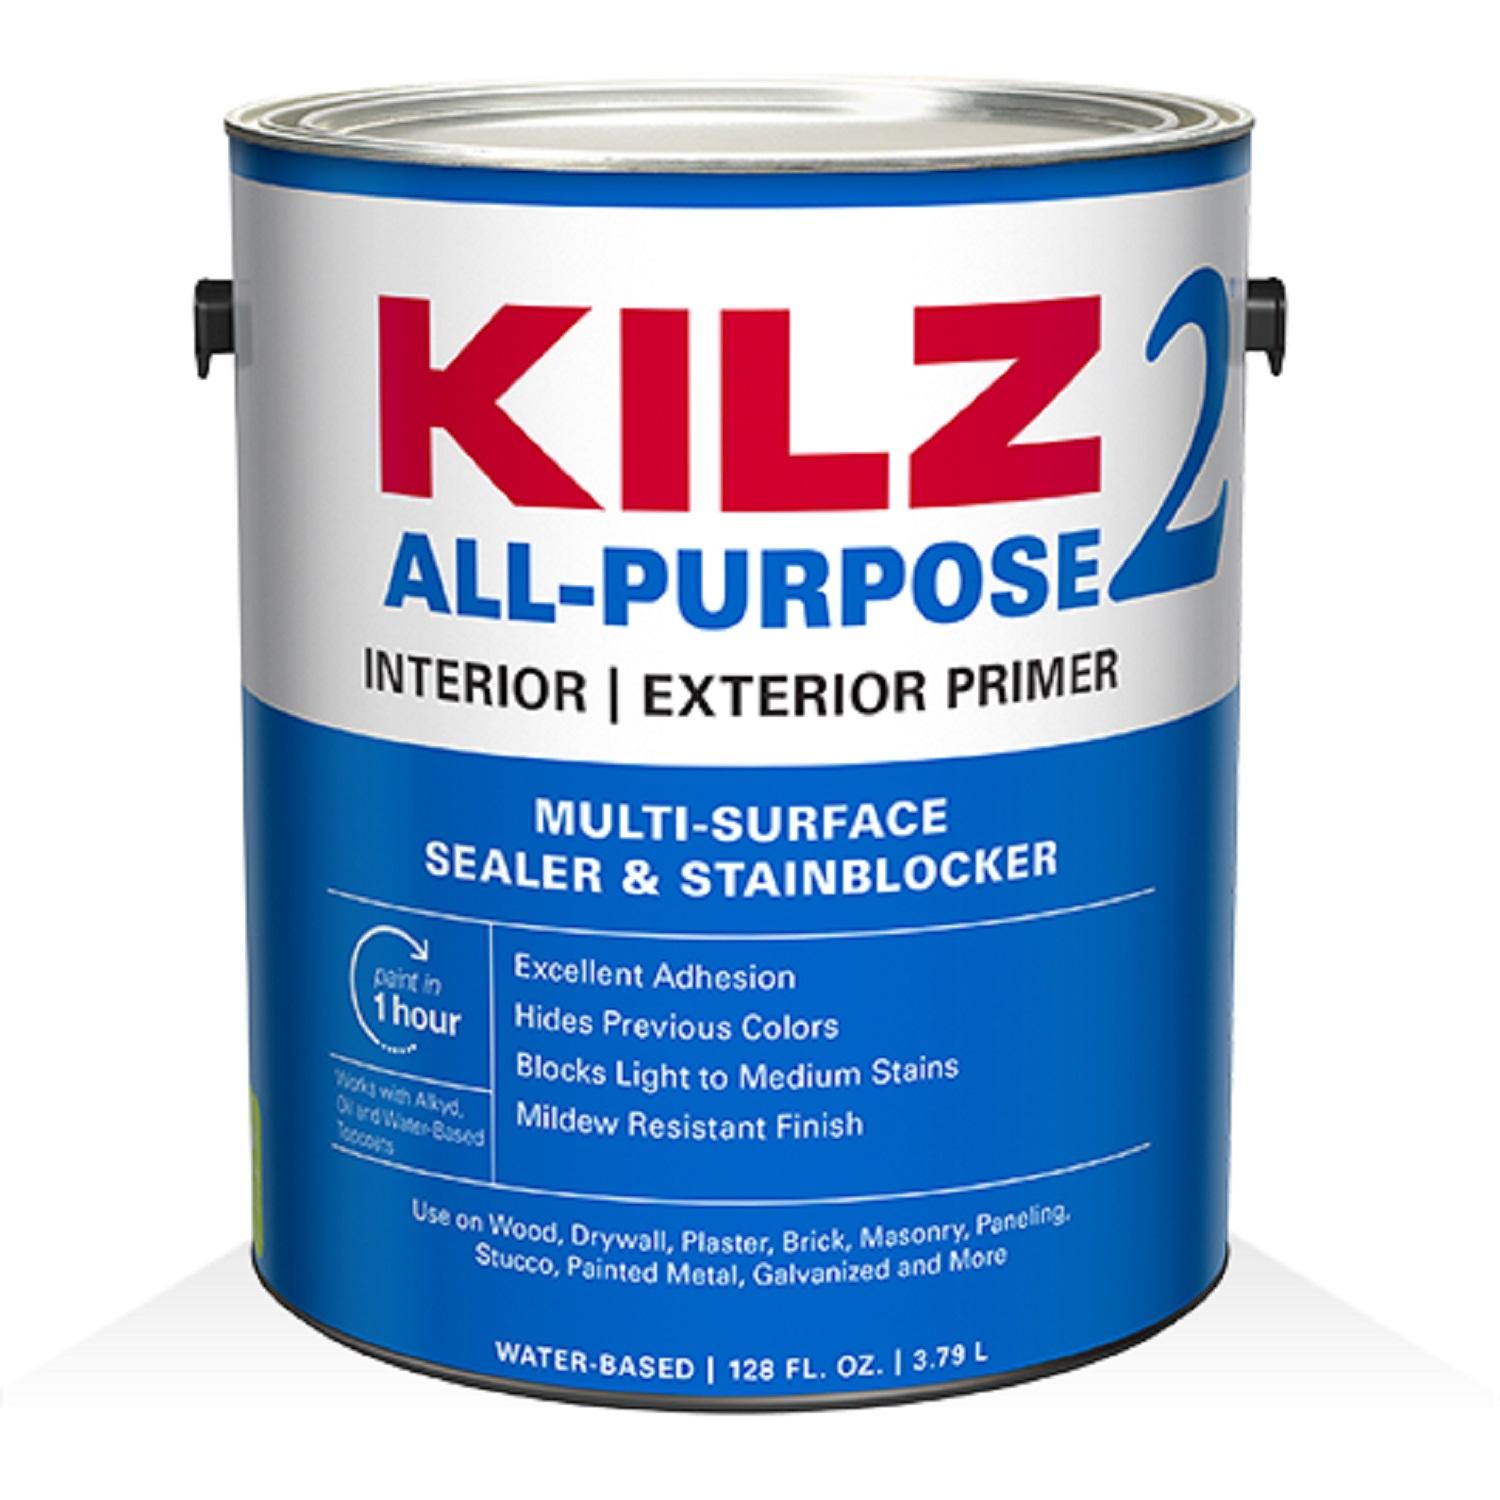 KILZ 2 Multi-Surface Stain Blocking Interior/Exterior Latex Primer/Sealer, White, 1 quart